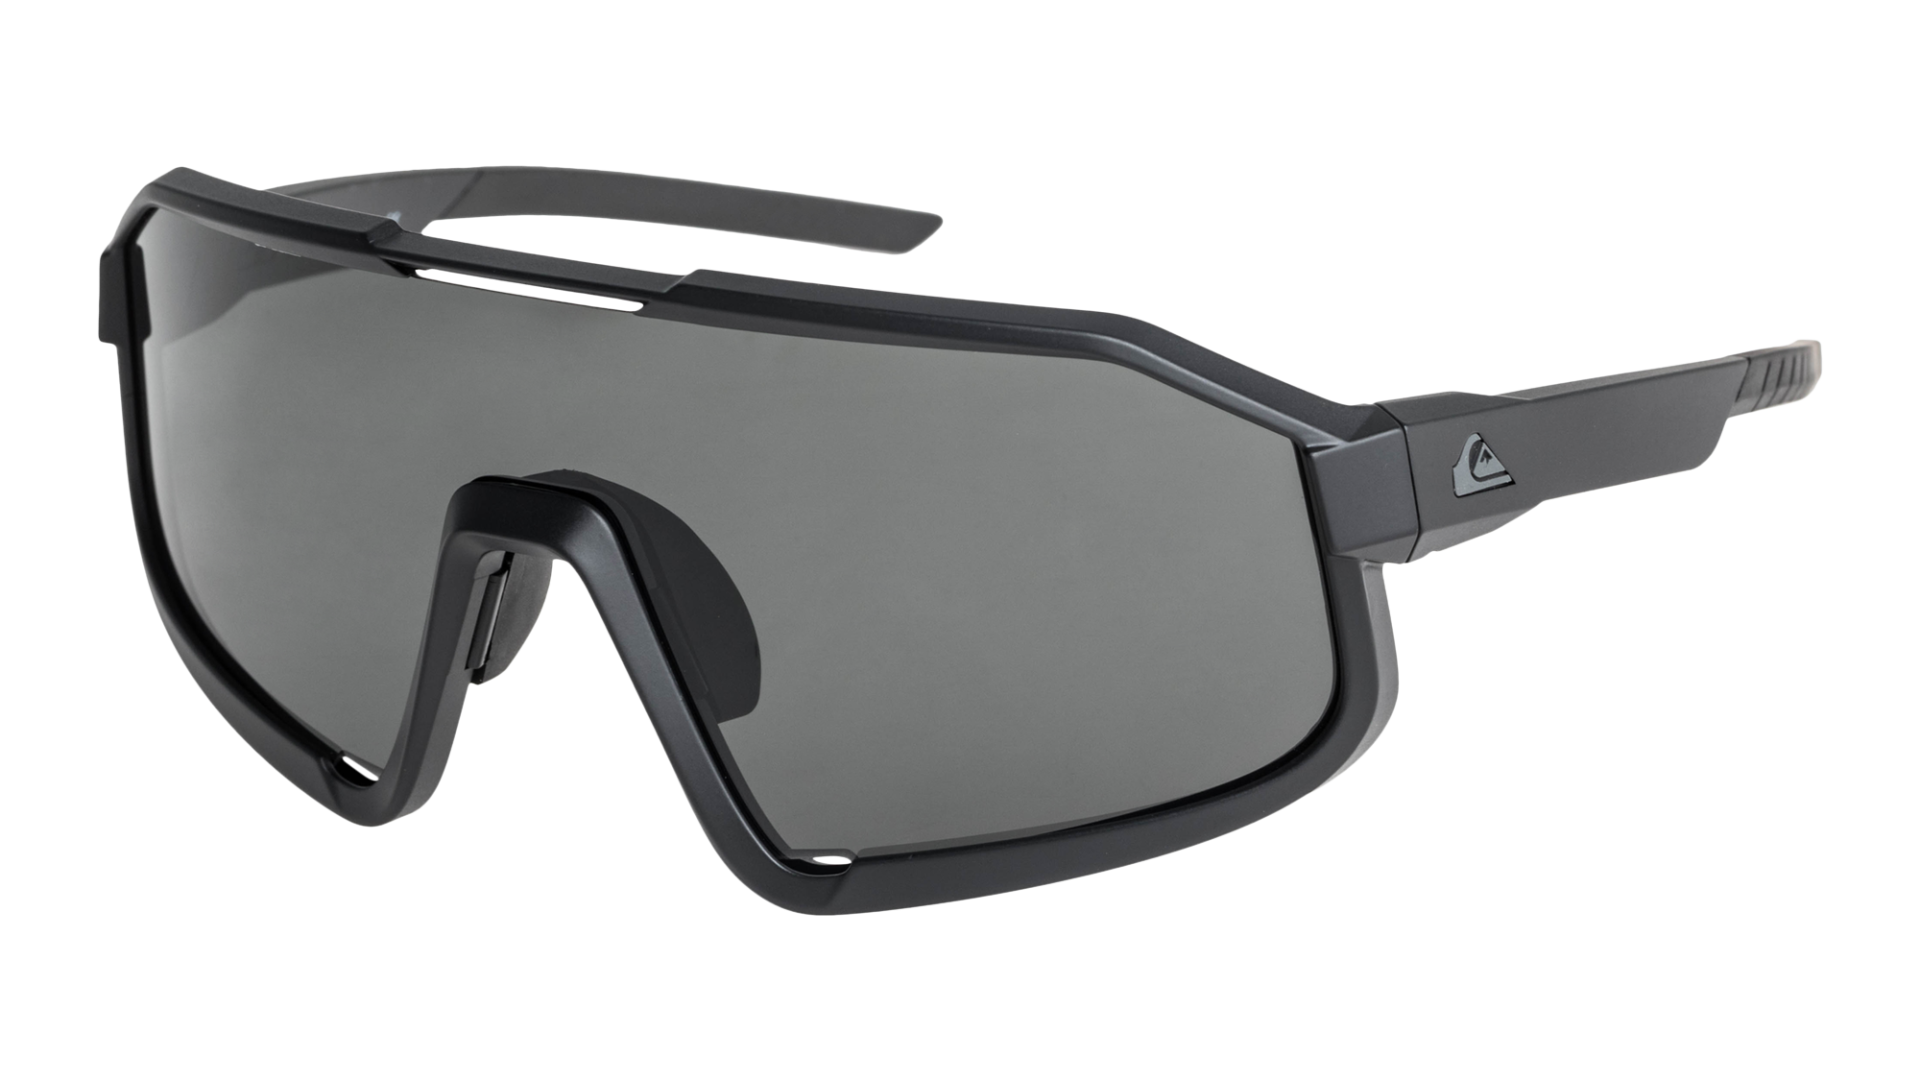 Quiksilver 2023 S/S Sunglasses Preview SOURCE Boardsport 